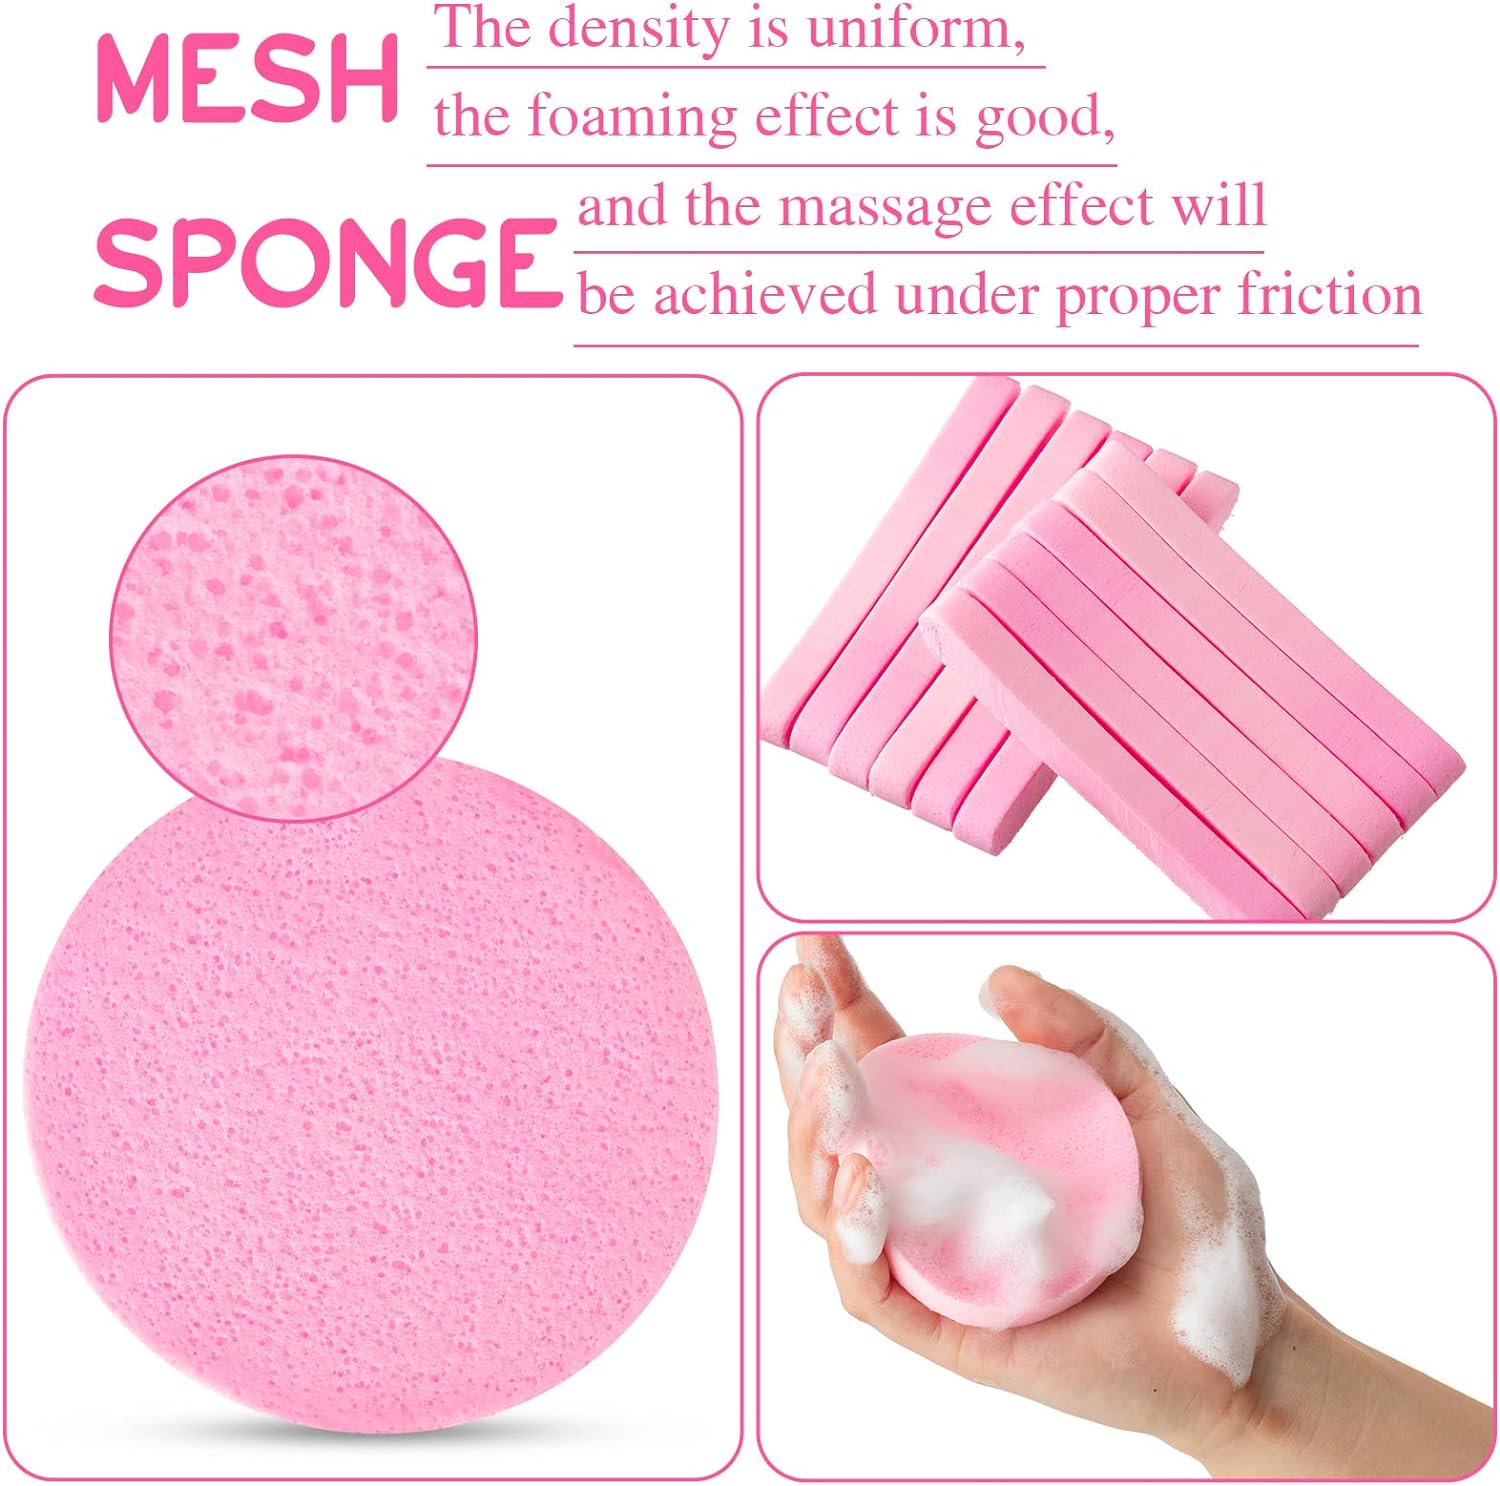 600 Pieces Compressed Facial Sponge Round Facial Sponge for Estheticians Face Sponges for Cleansing Face Wash Sponges Disposable Sponges for Women Spa Exfoliating Cleansing (Pink)